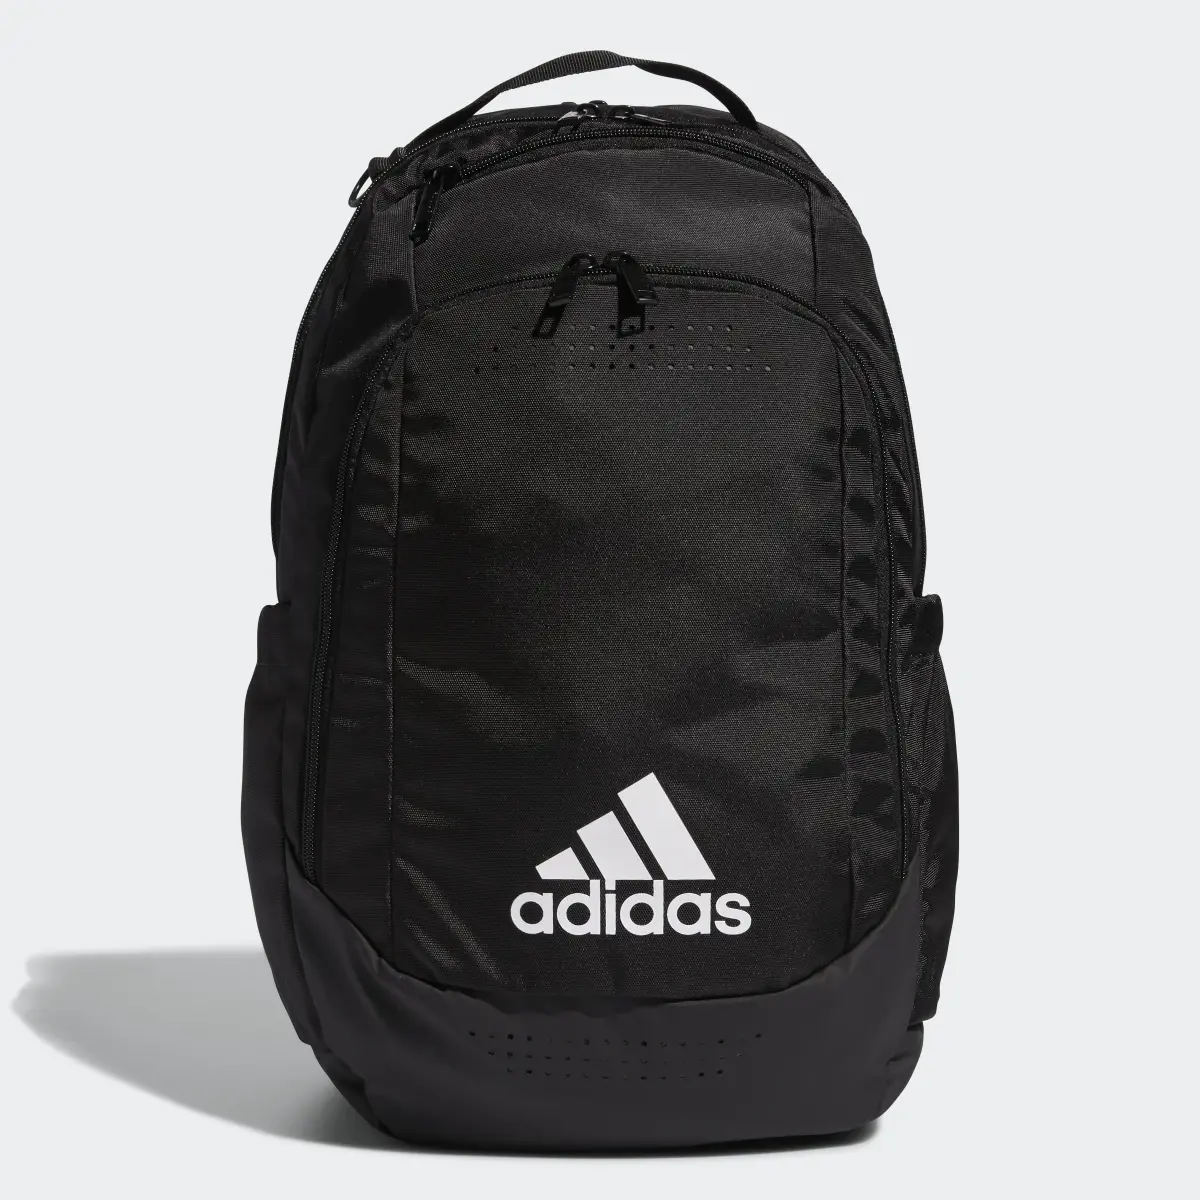 Adidas Defender Backpack. 2